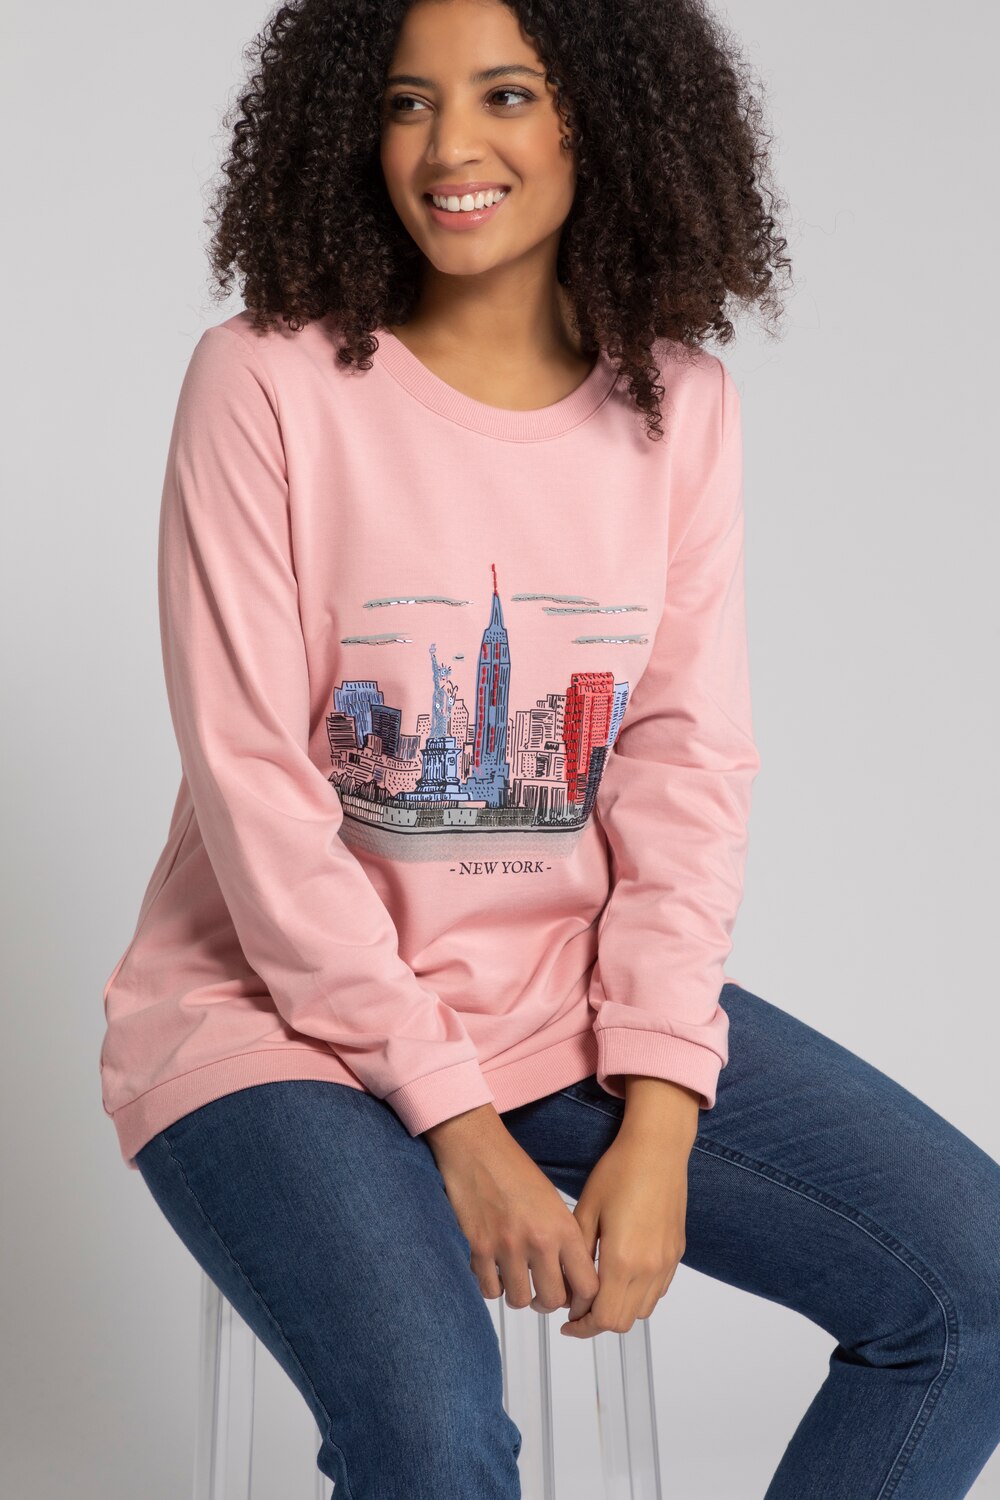 Plus Size Eco Cotton NEW YORK Skyline Sweatshirt, Woman, red, size: 20/22, cotton, Ulla Popken